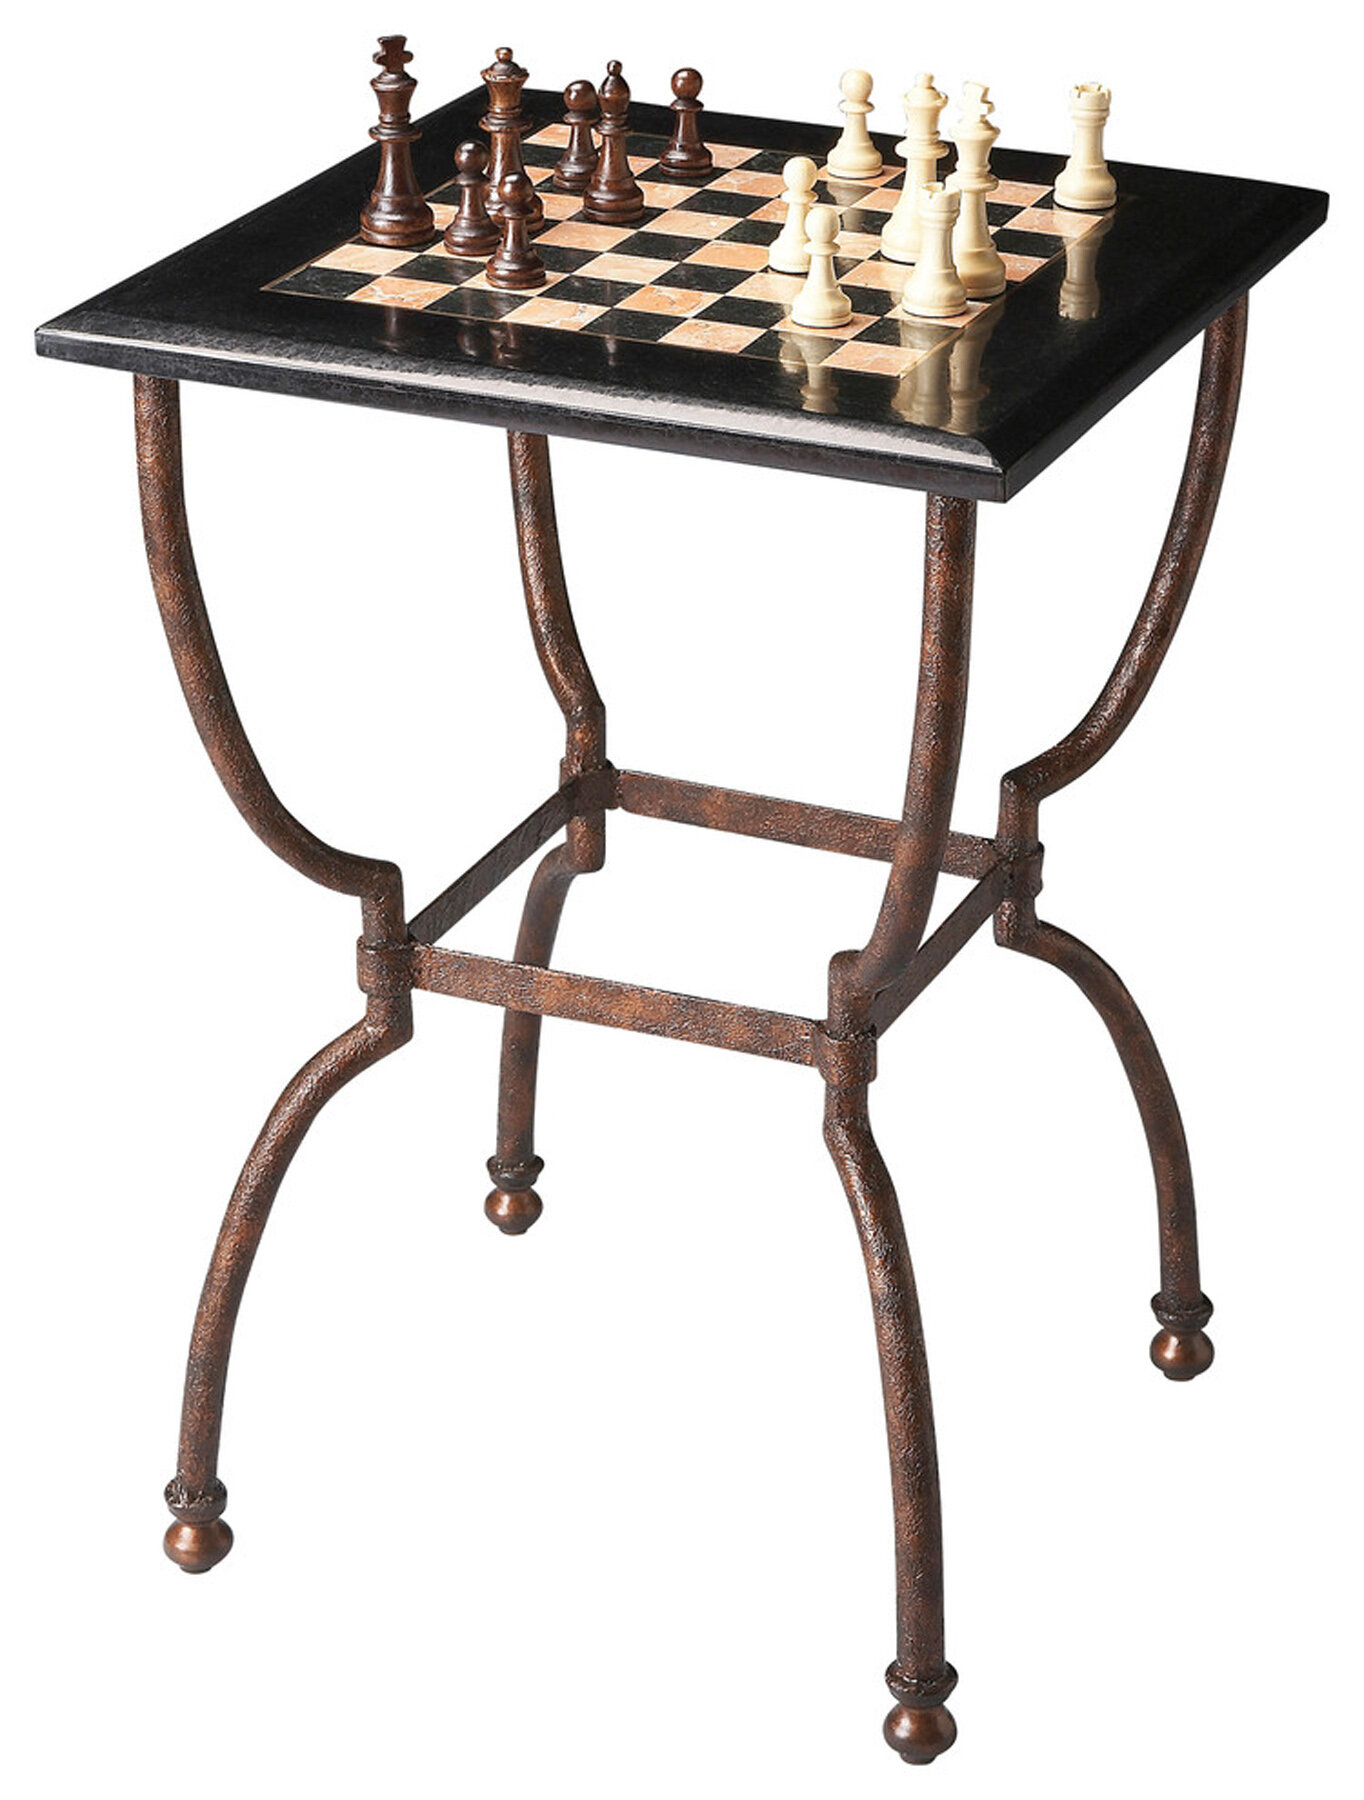 ORE Furniture 23" L Four Leg Chess Table 